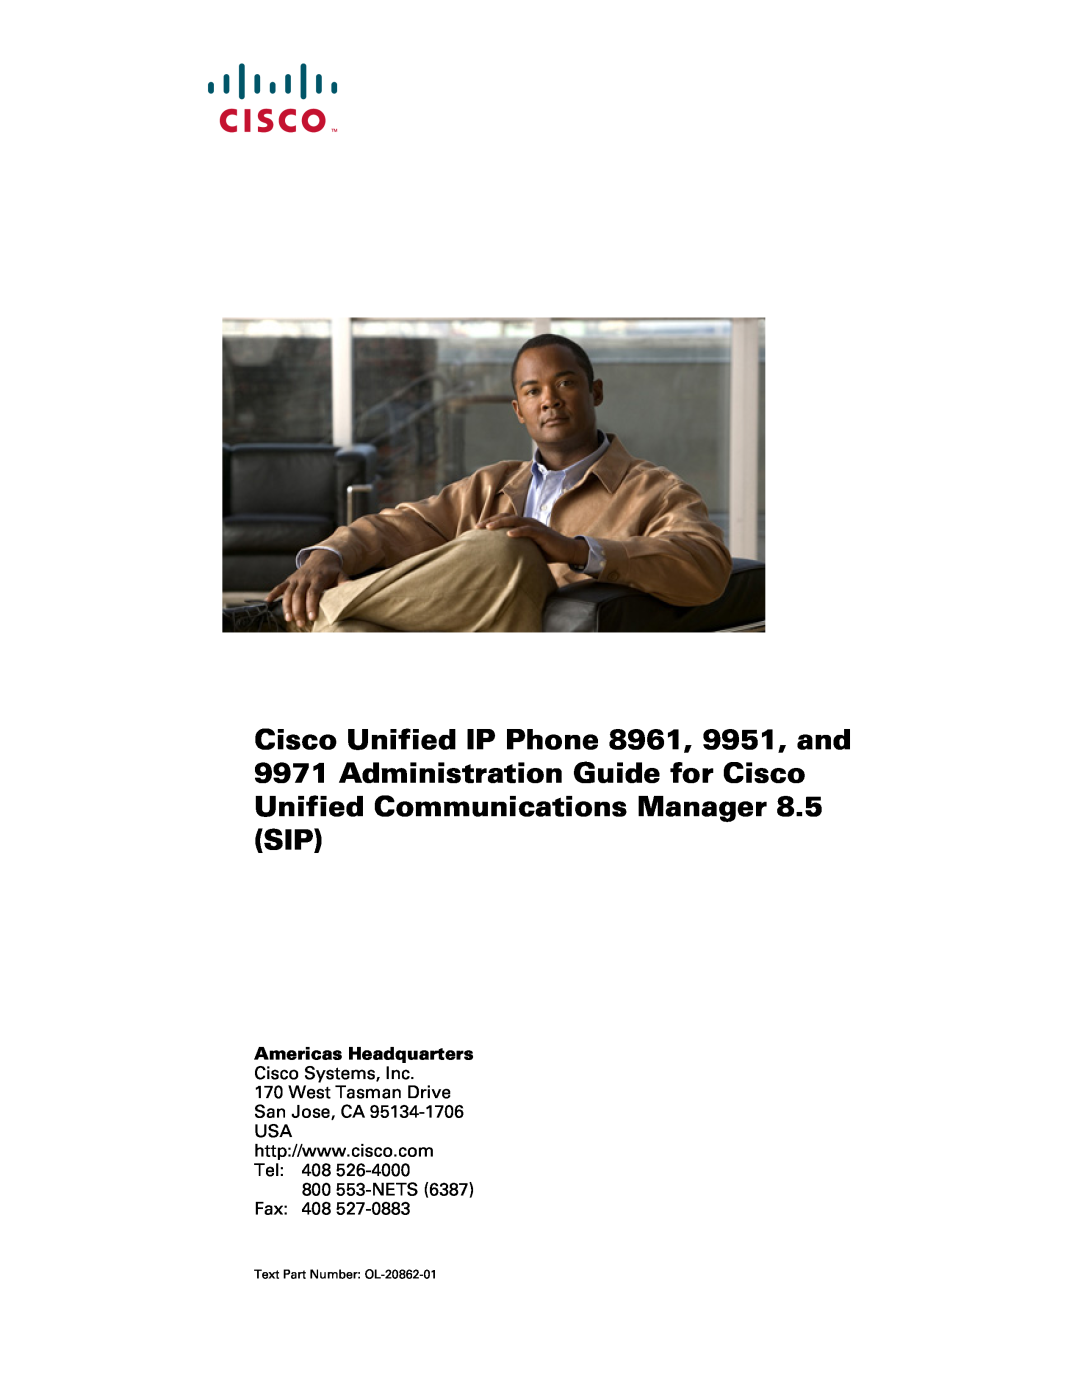 Cisco Systems 9951, 9971, 8961 manual Numerics, IN-1, I N D E 